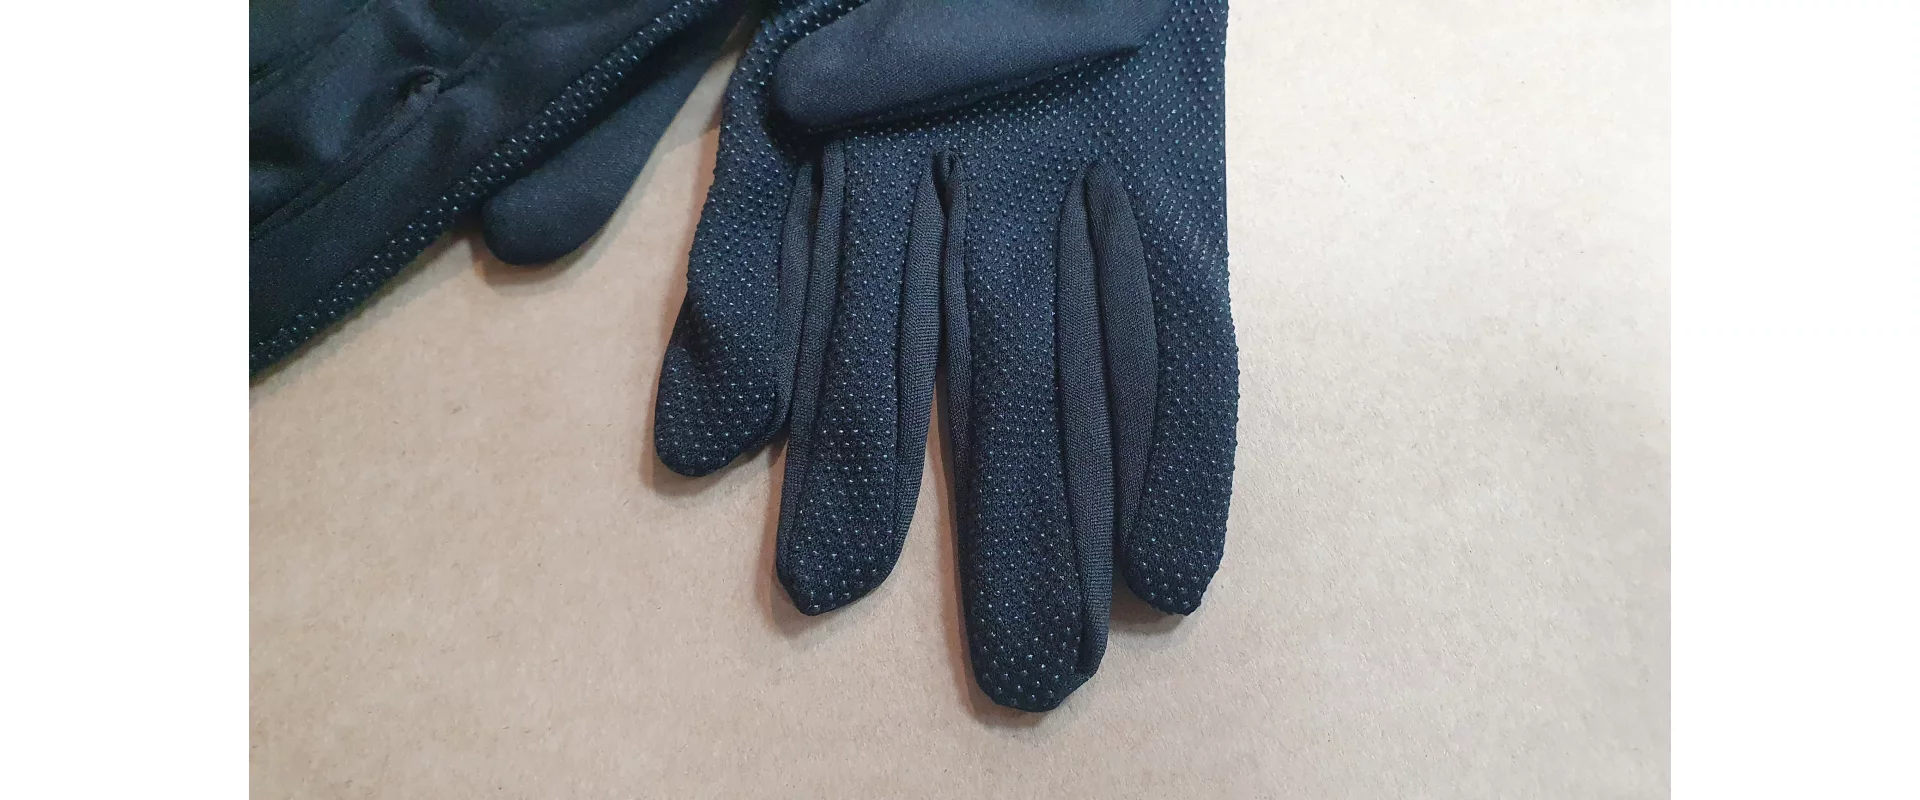 Перчатки для надевания гидрокостюма фото 1